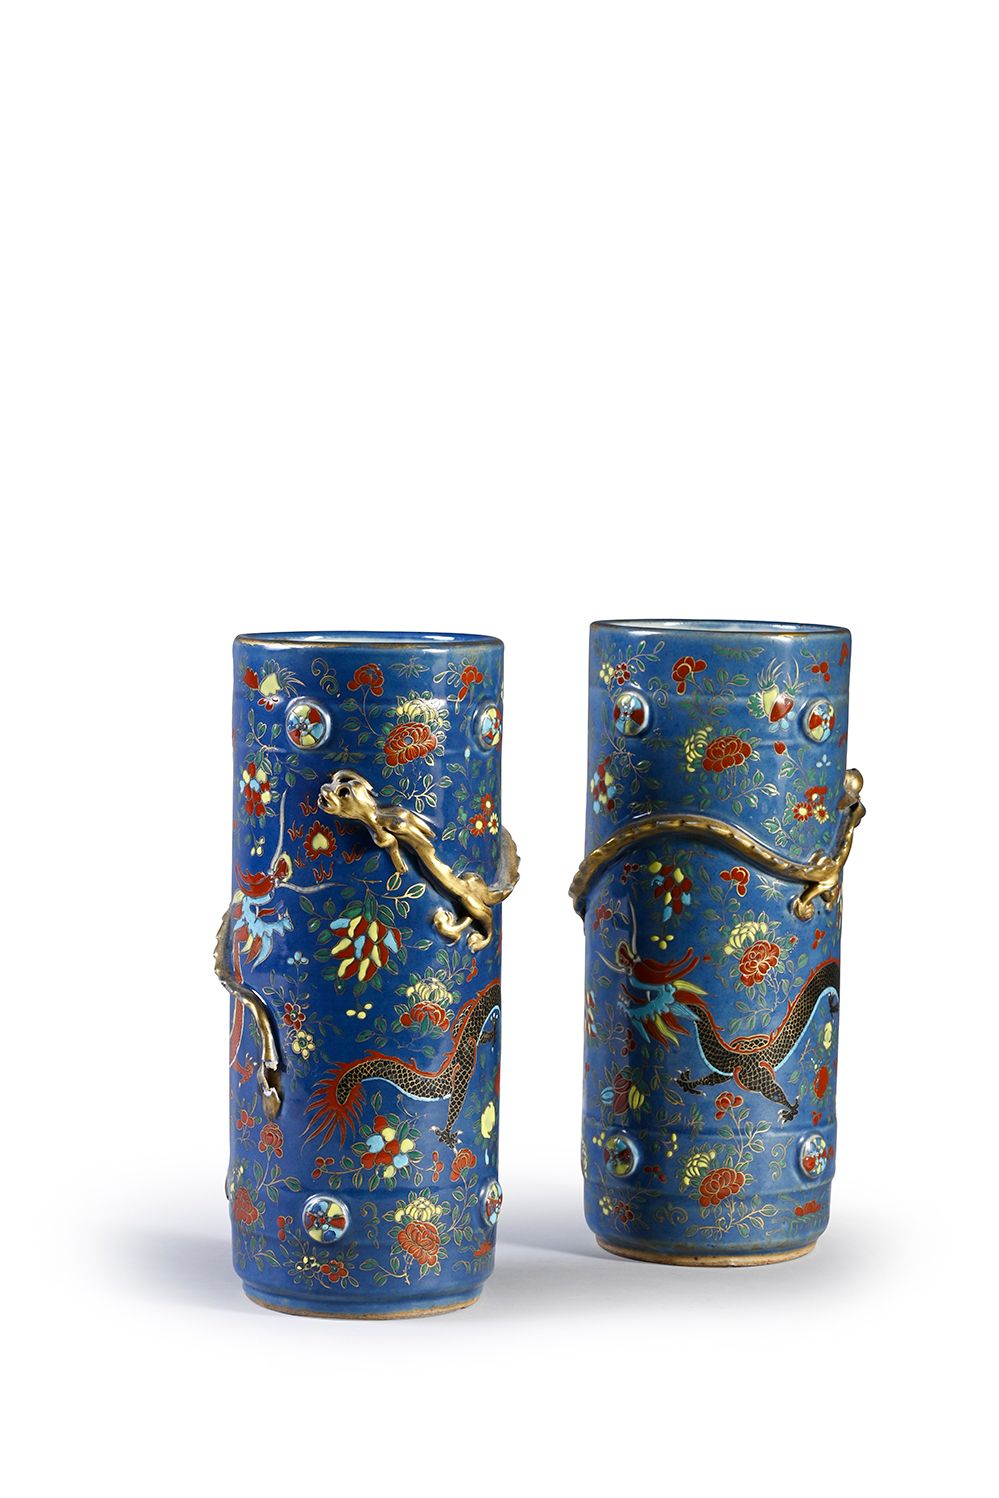 Null 一对蓝底的瓷帽架，上面有浮雕的龙在追逐圣珠的装饰。
中国，19世纪末。
高：30.5厘米。
一个花瓶的底座有裂痕。